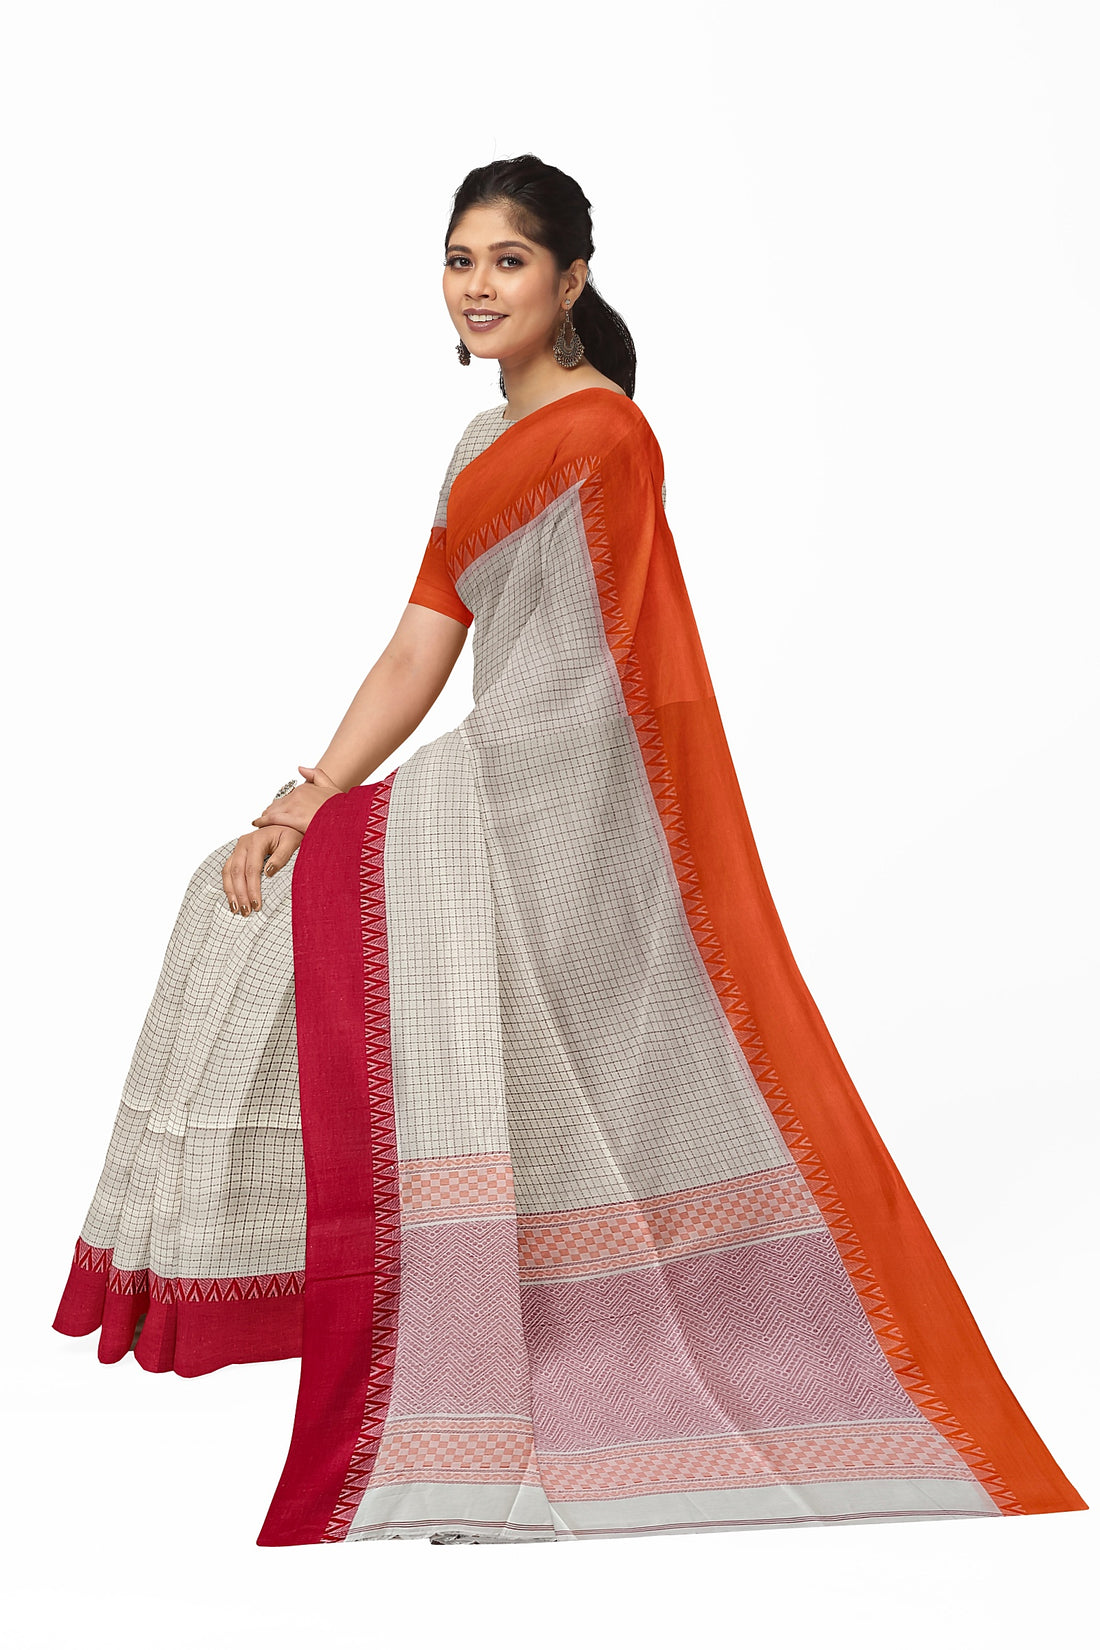 Bengal Handloom Cotton Sarees: A Timeless Tradition